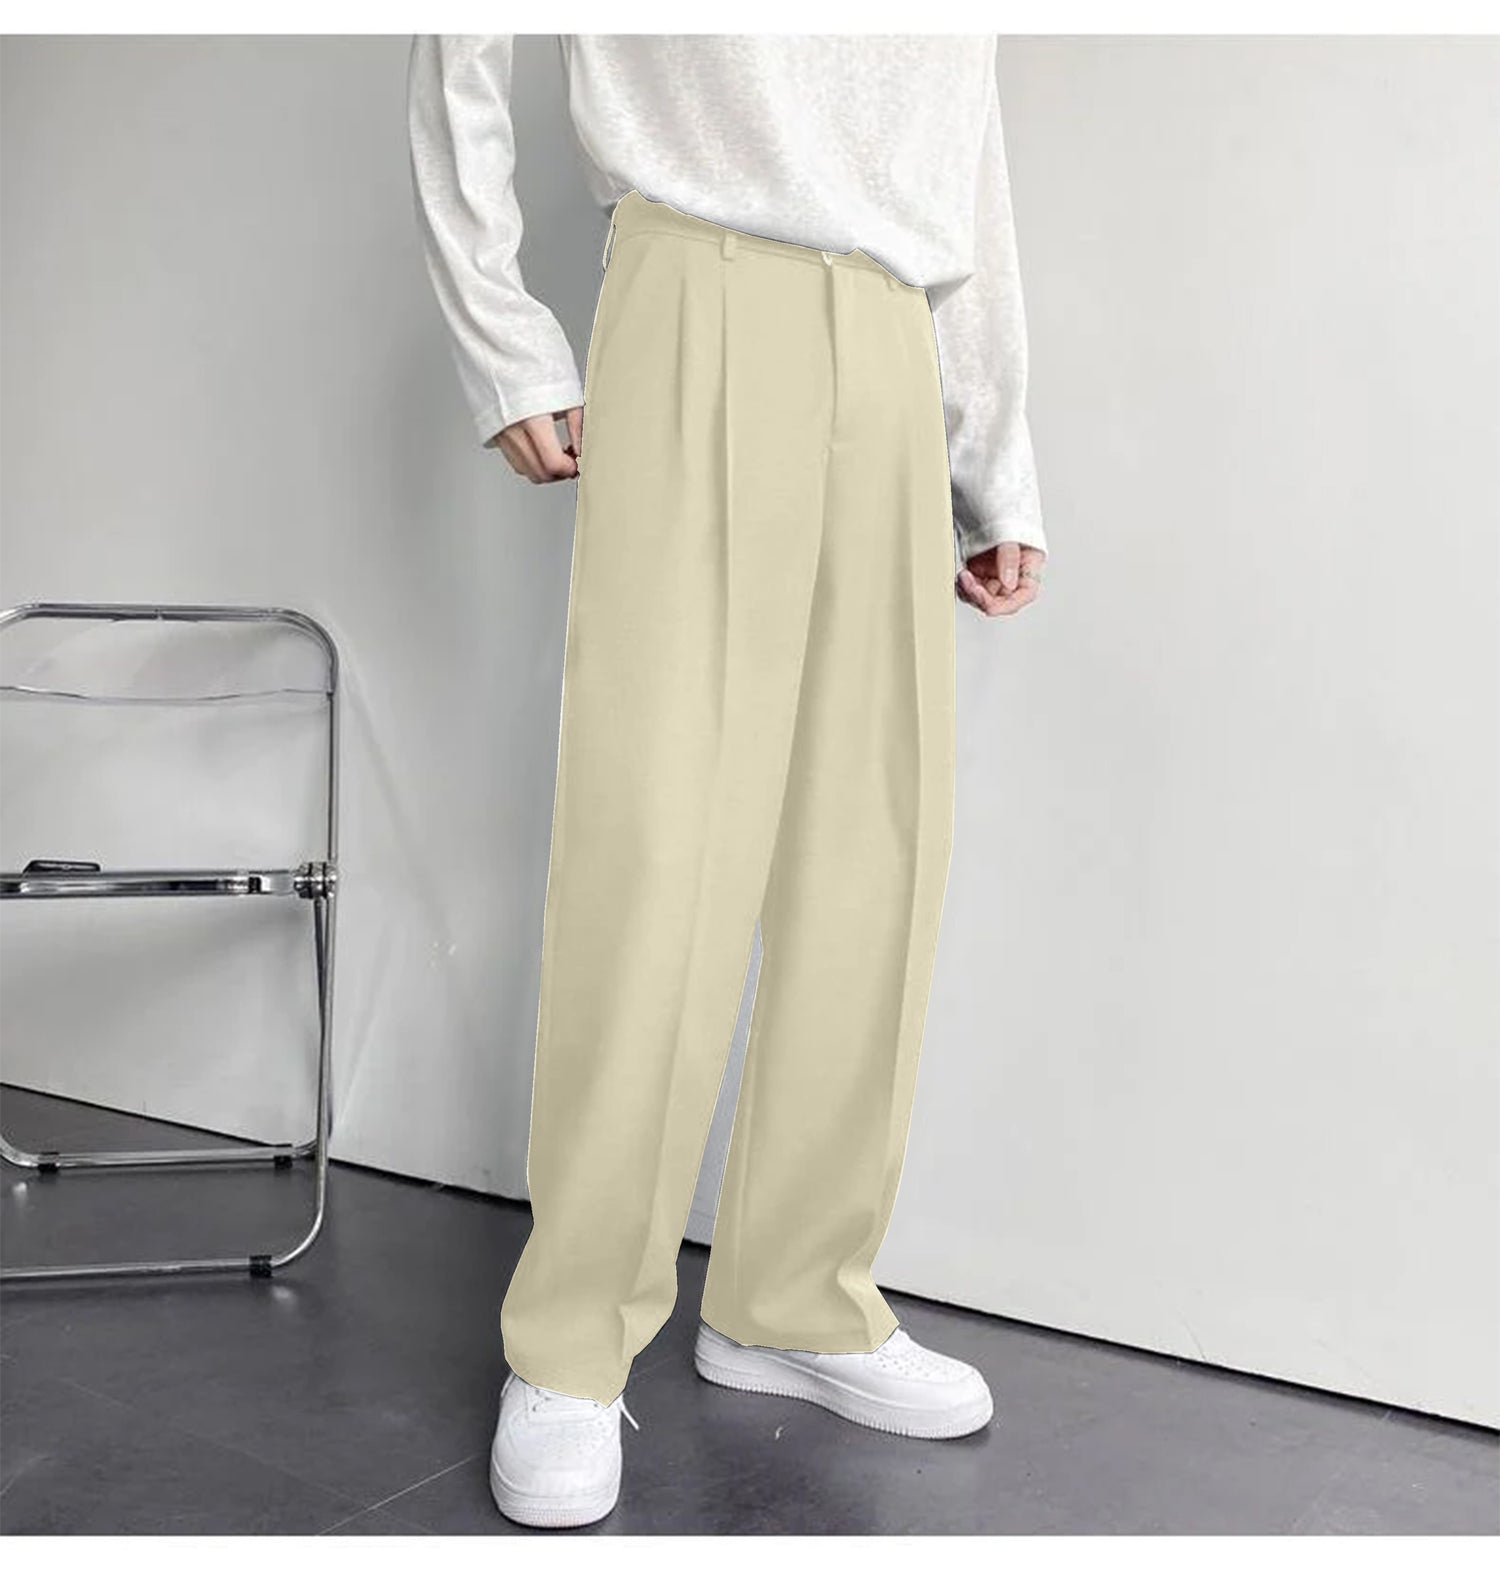 Timeless Comfort: Bwolves Korean Baggy Loose Fit Pants in Pearl Color.